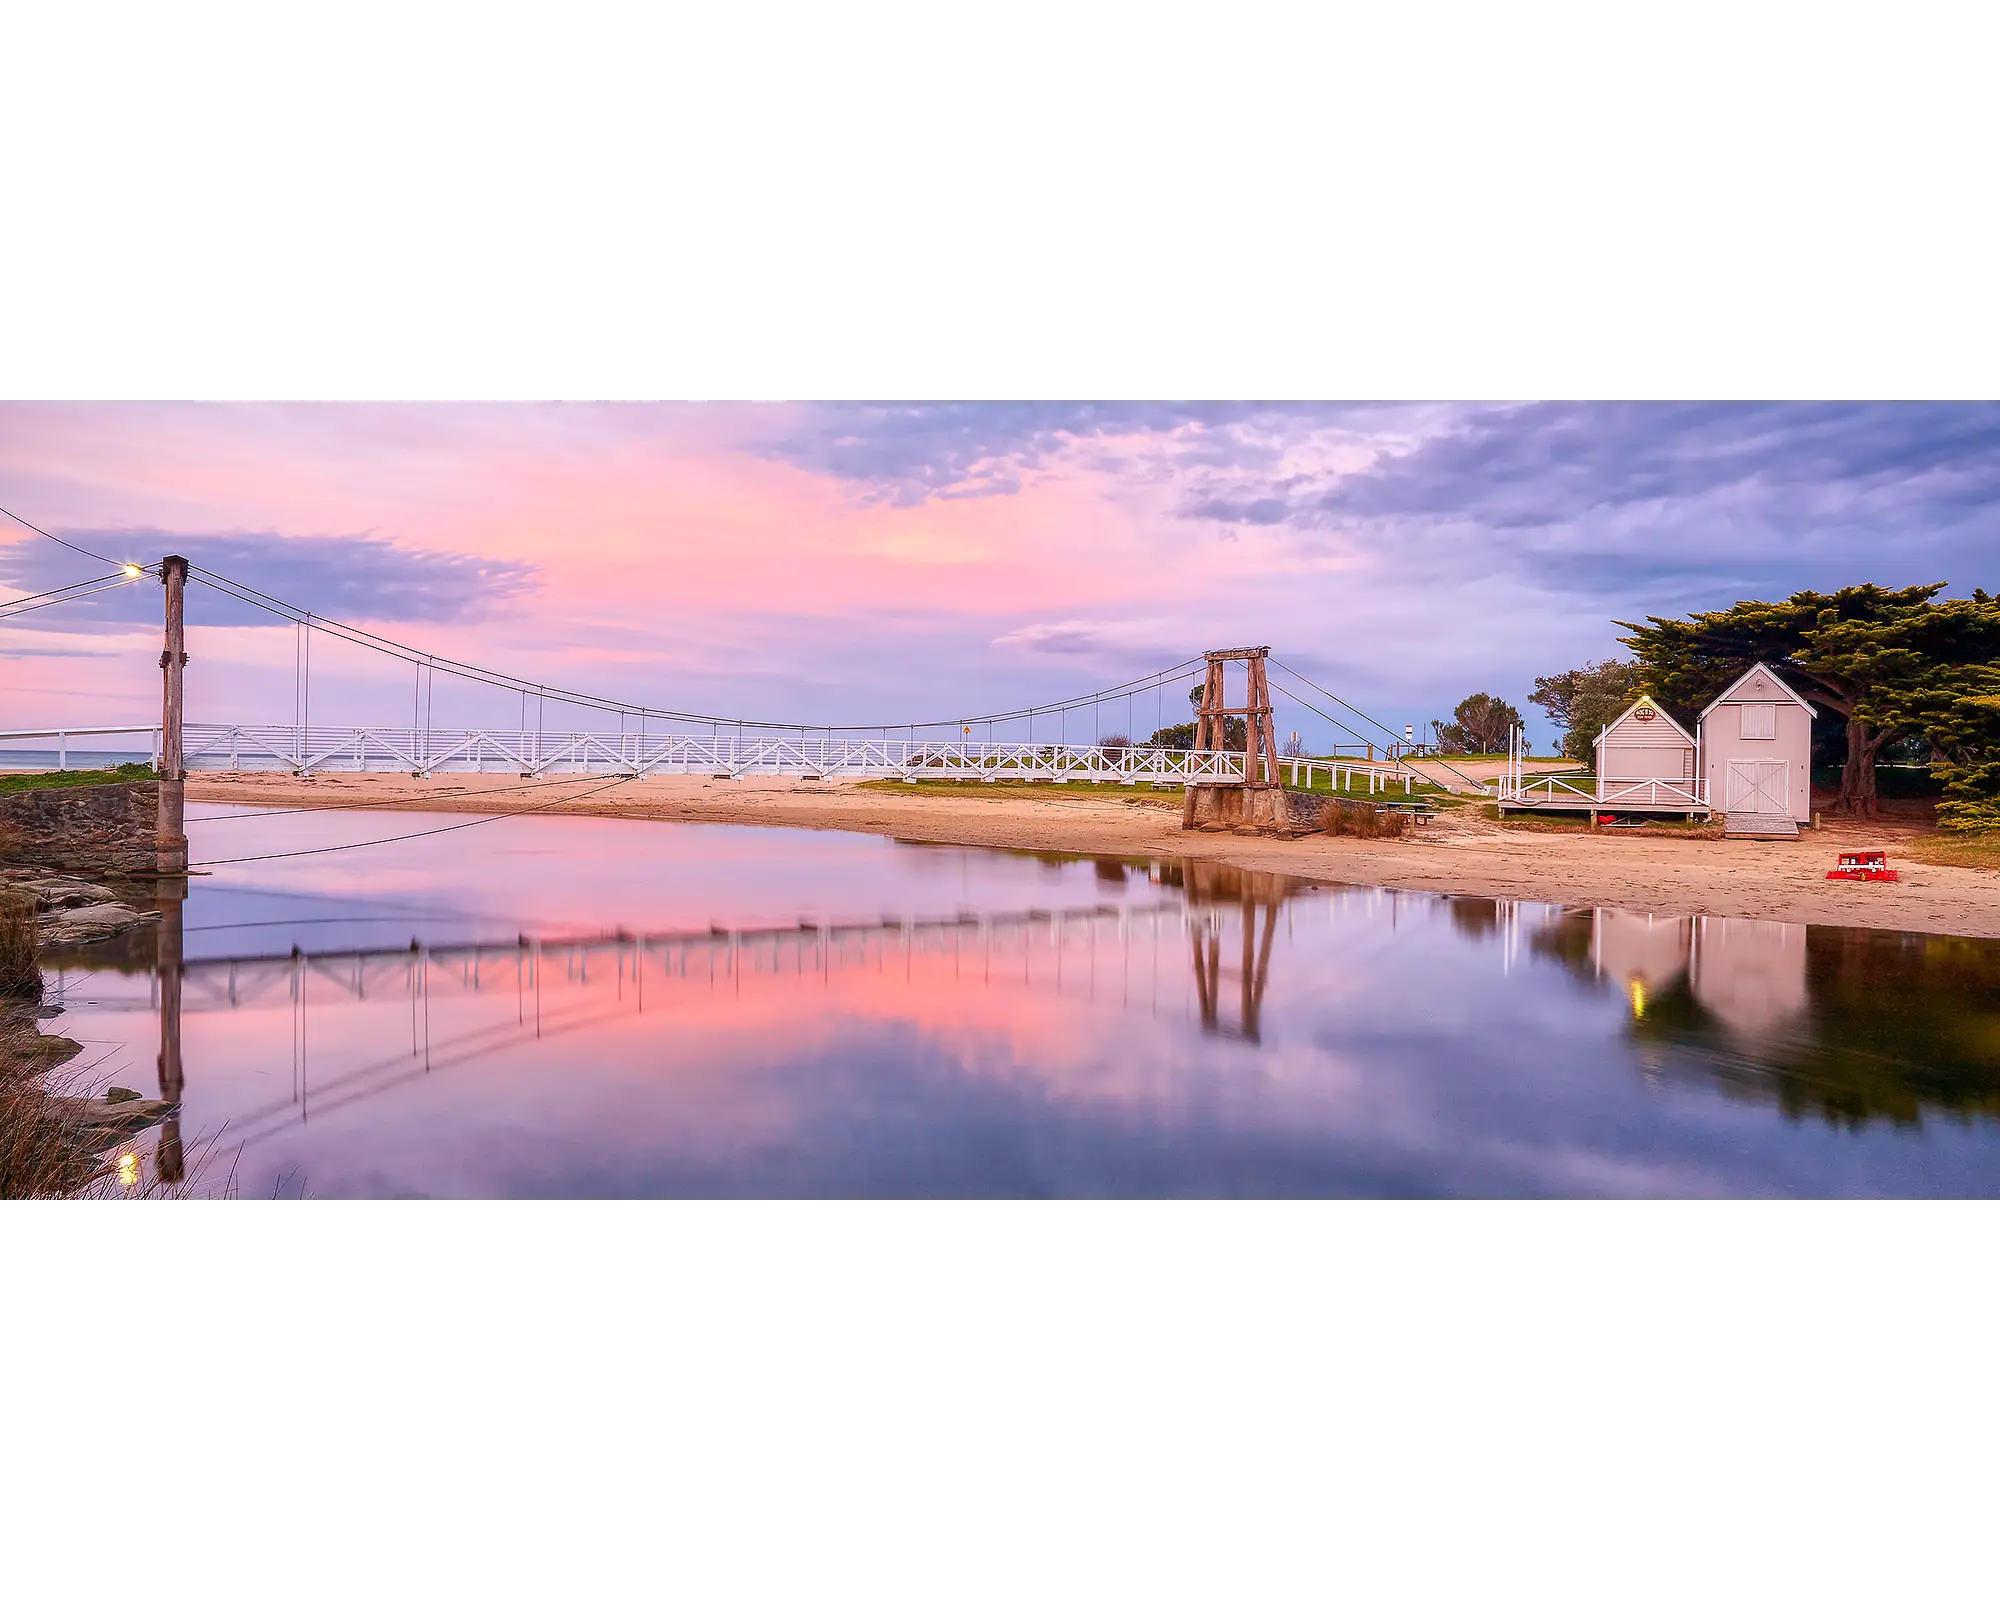 Swing Bridge - sunset reflections, Lorne, Victoria, Australia.